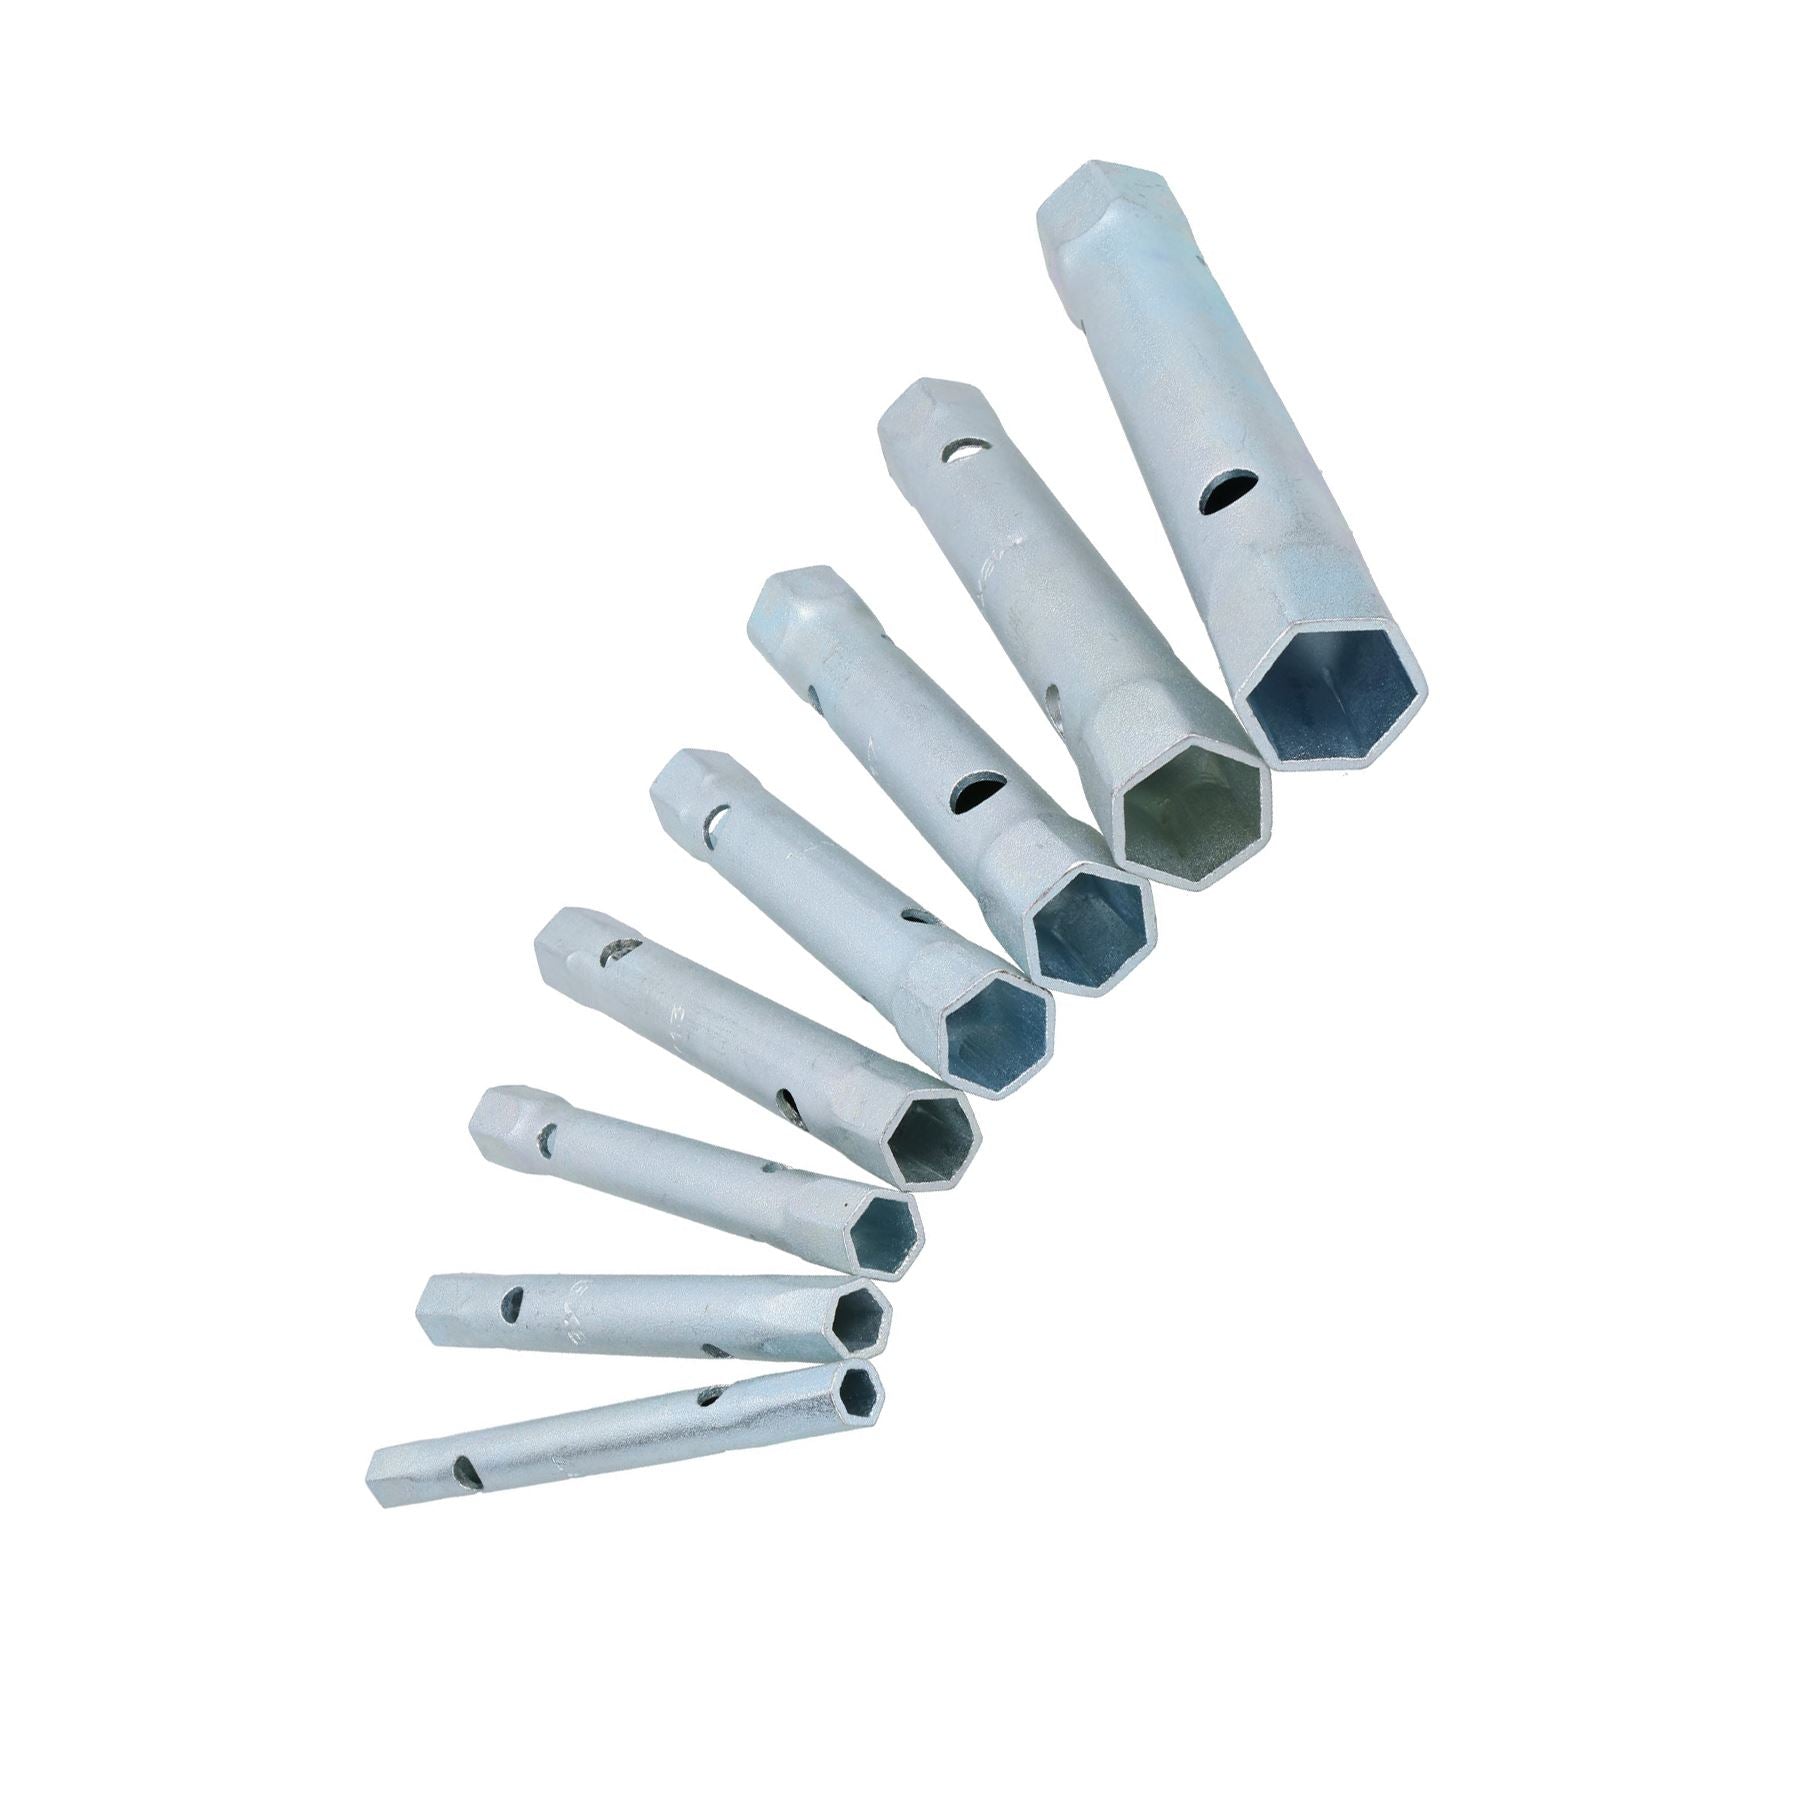 Metric Box Spanner Wrench Tubular Torque Bar Set Plug Sockets 8pc 6 - 22mm